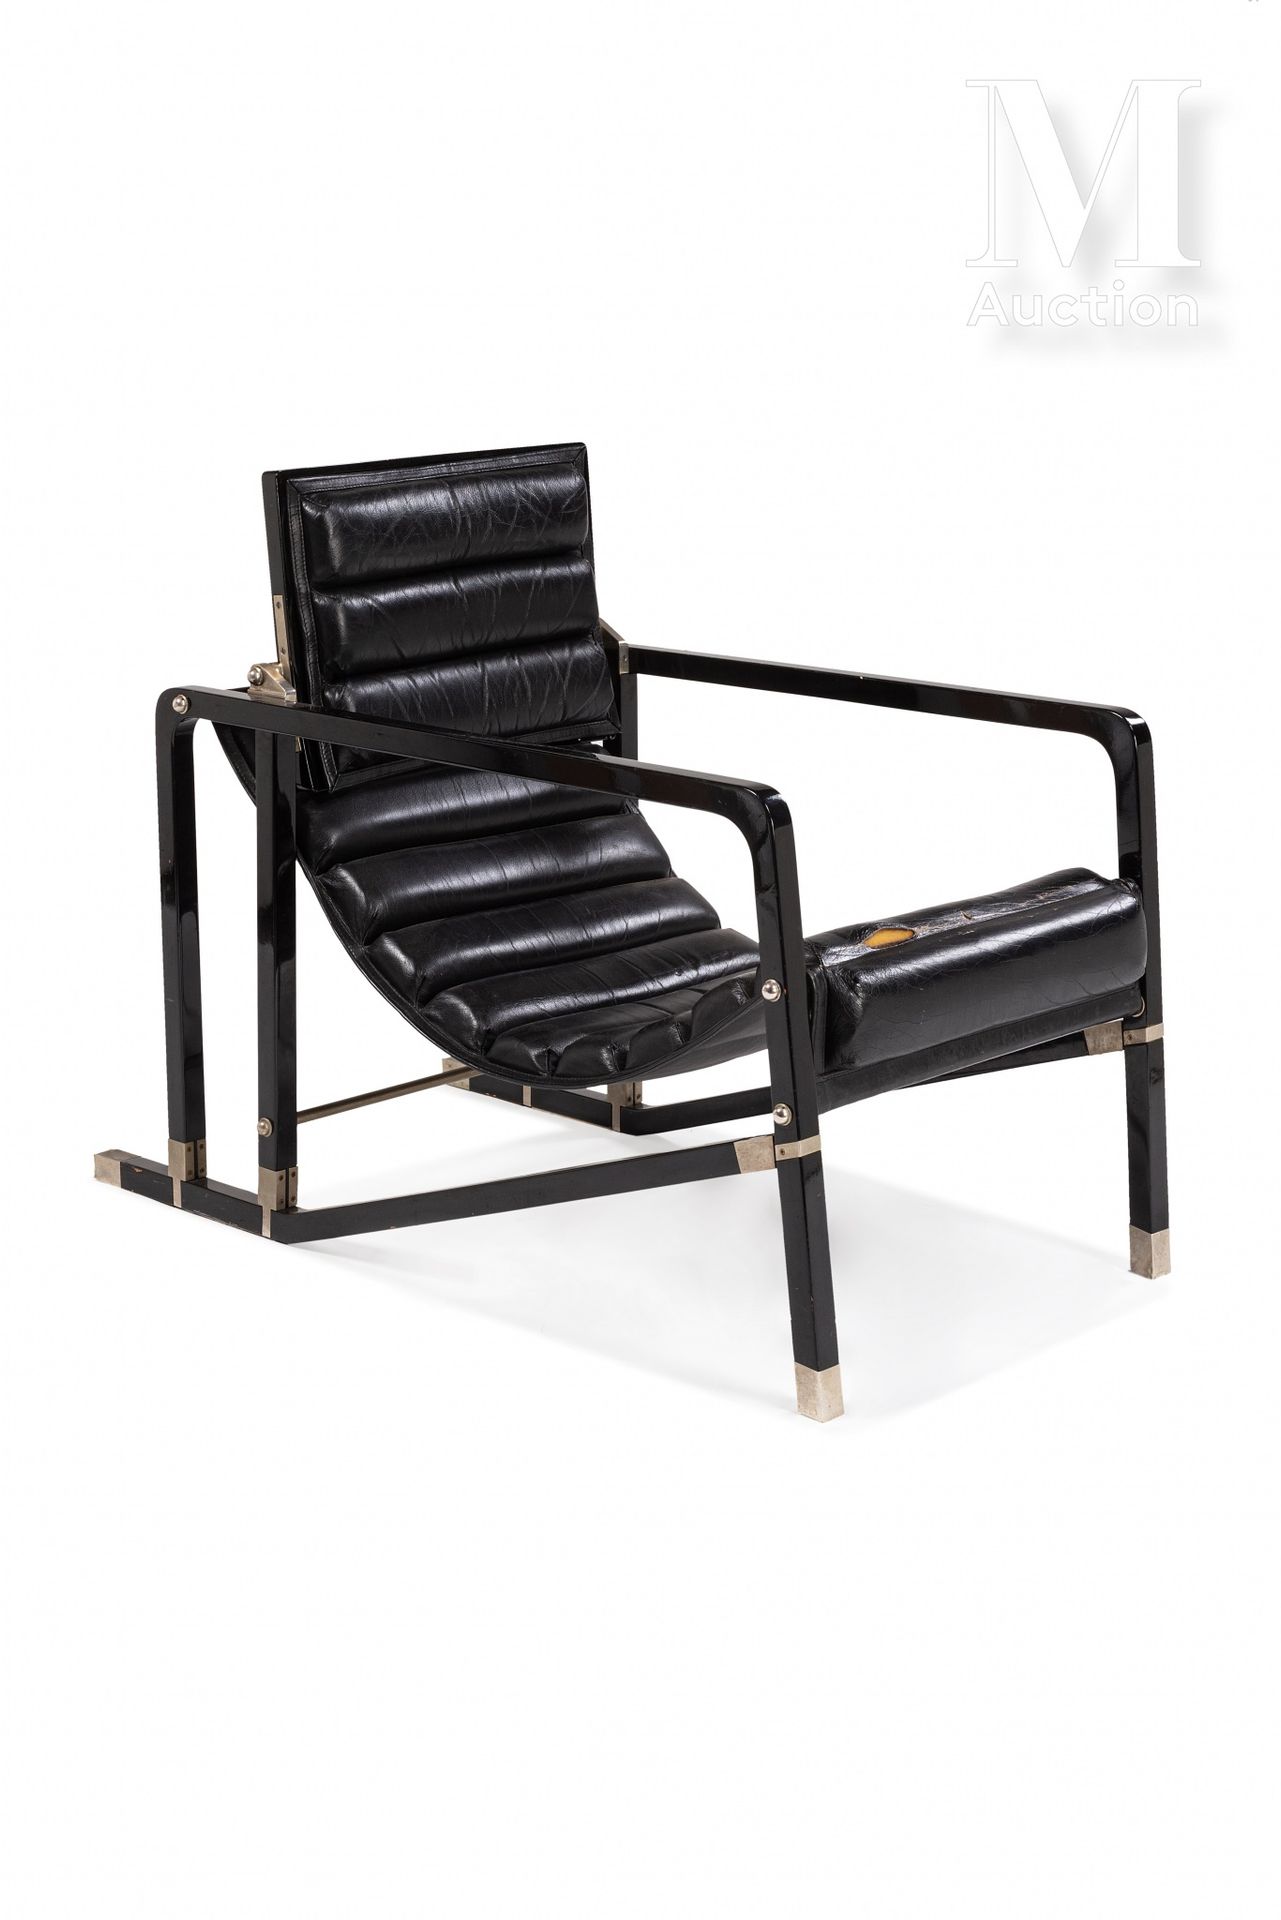 Eileen GRAY , modèle de "Liegestuhl"

Sessel mit neigbaren Kopfstützen aus schwa&hellip;